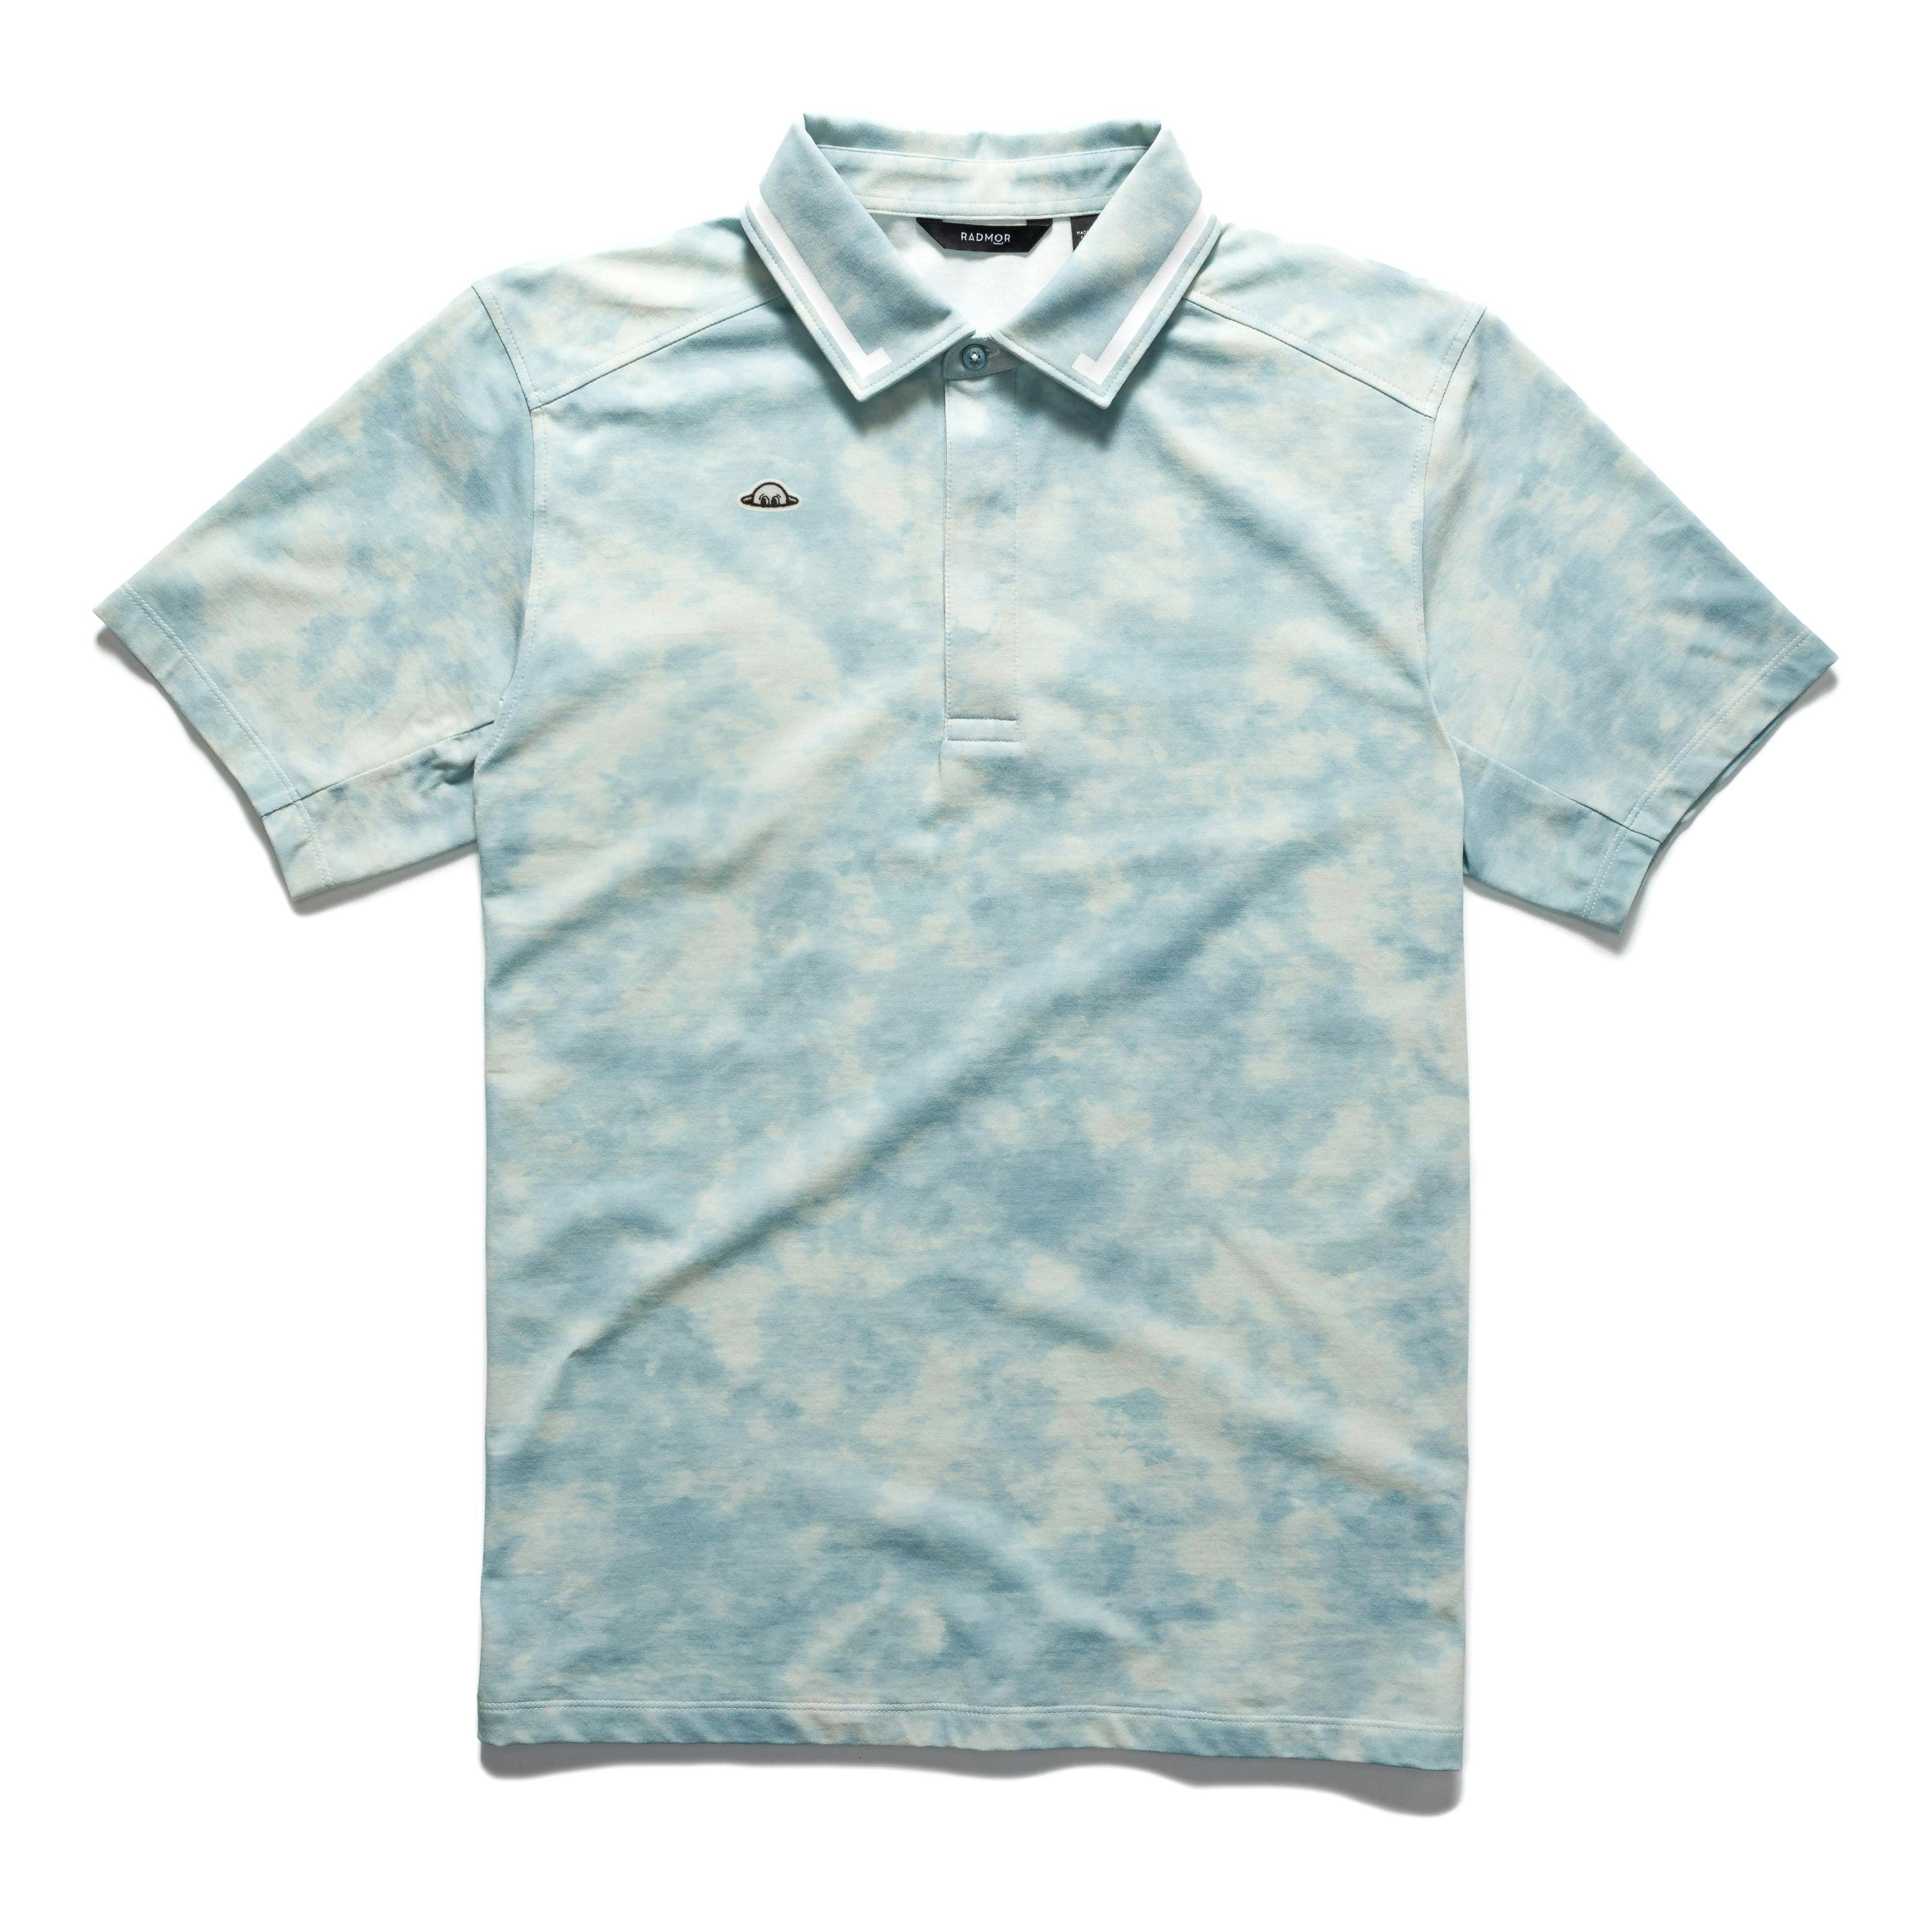 Alpinestars Eternal Polo Shirt Choose Size Navy Blue